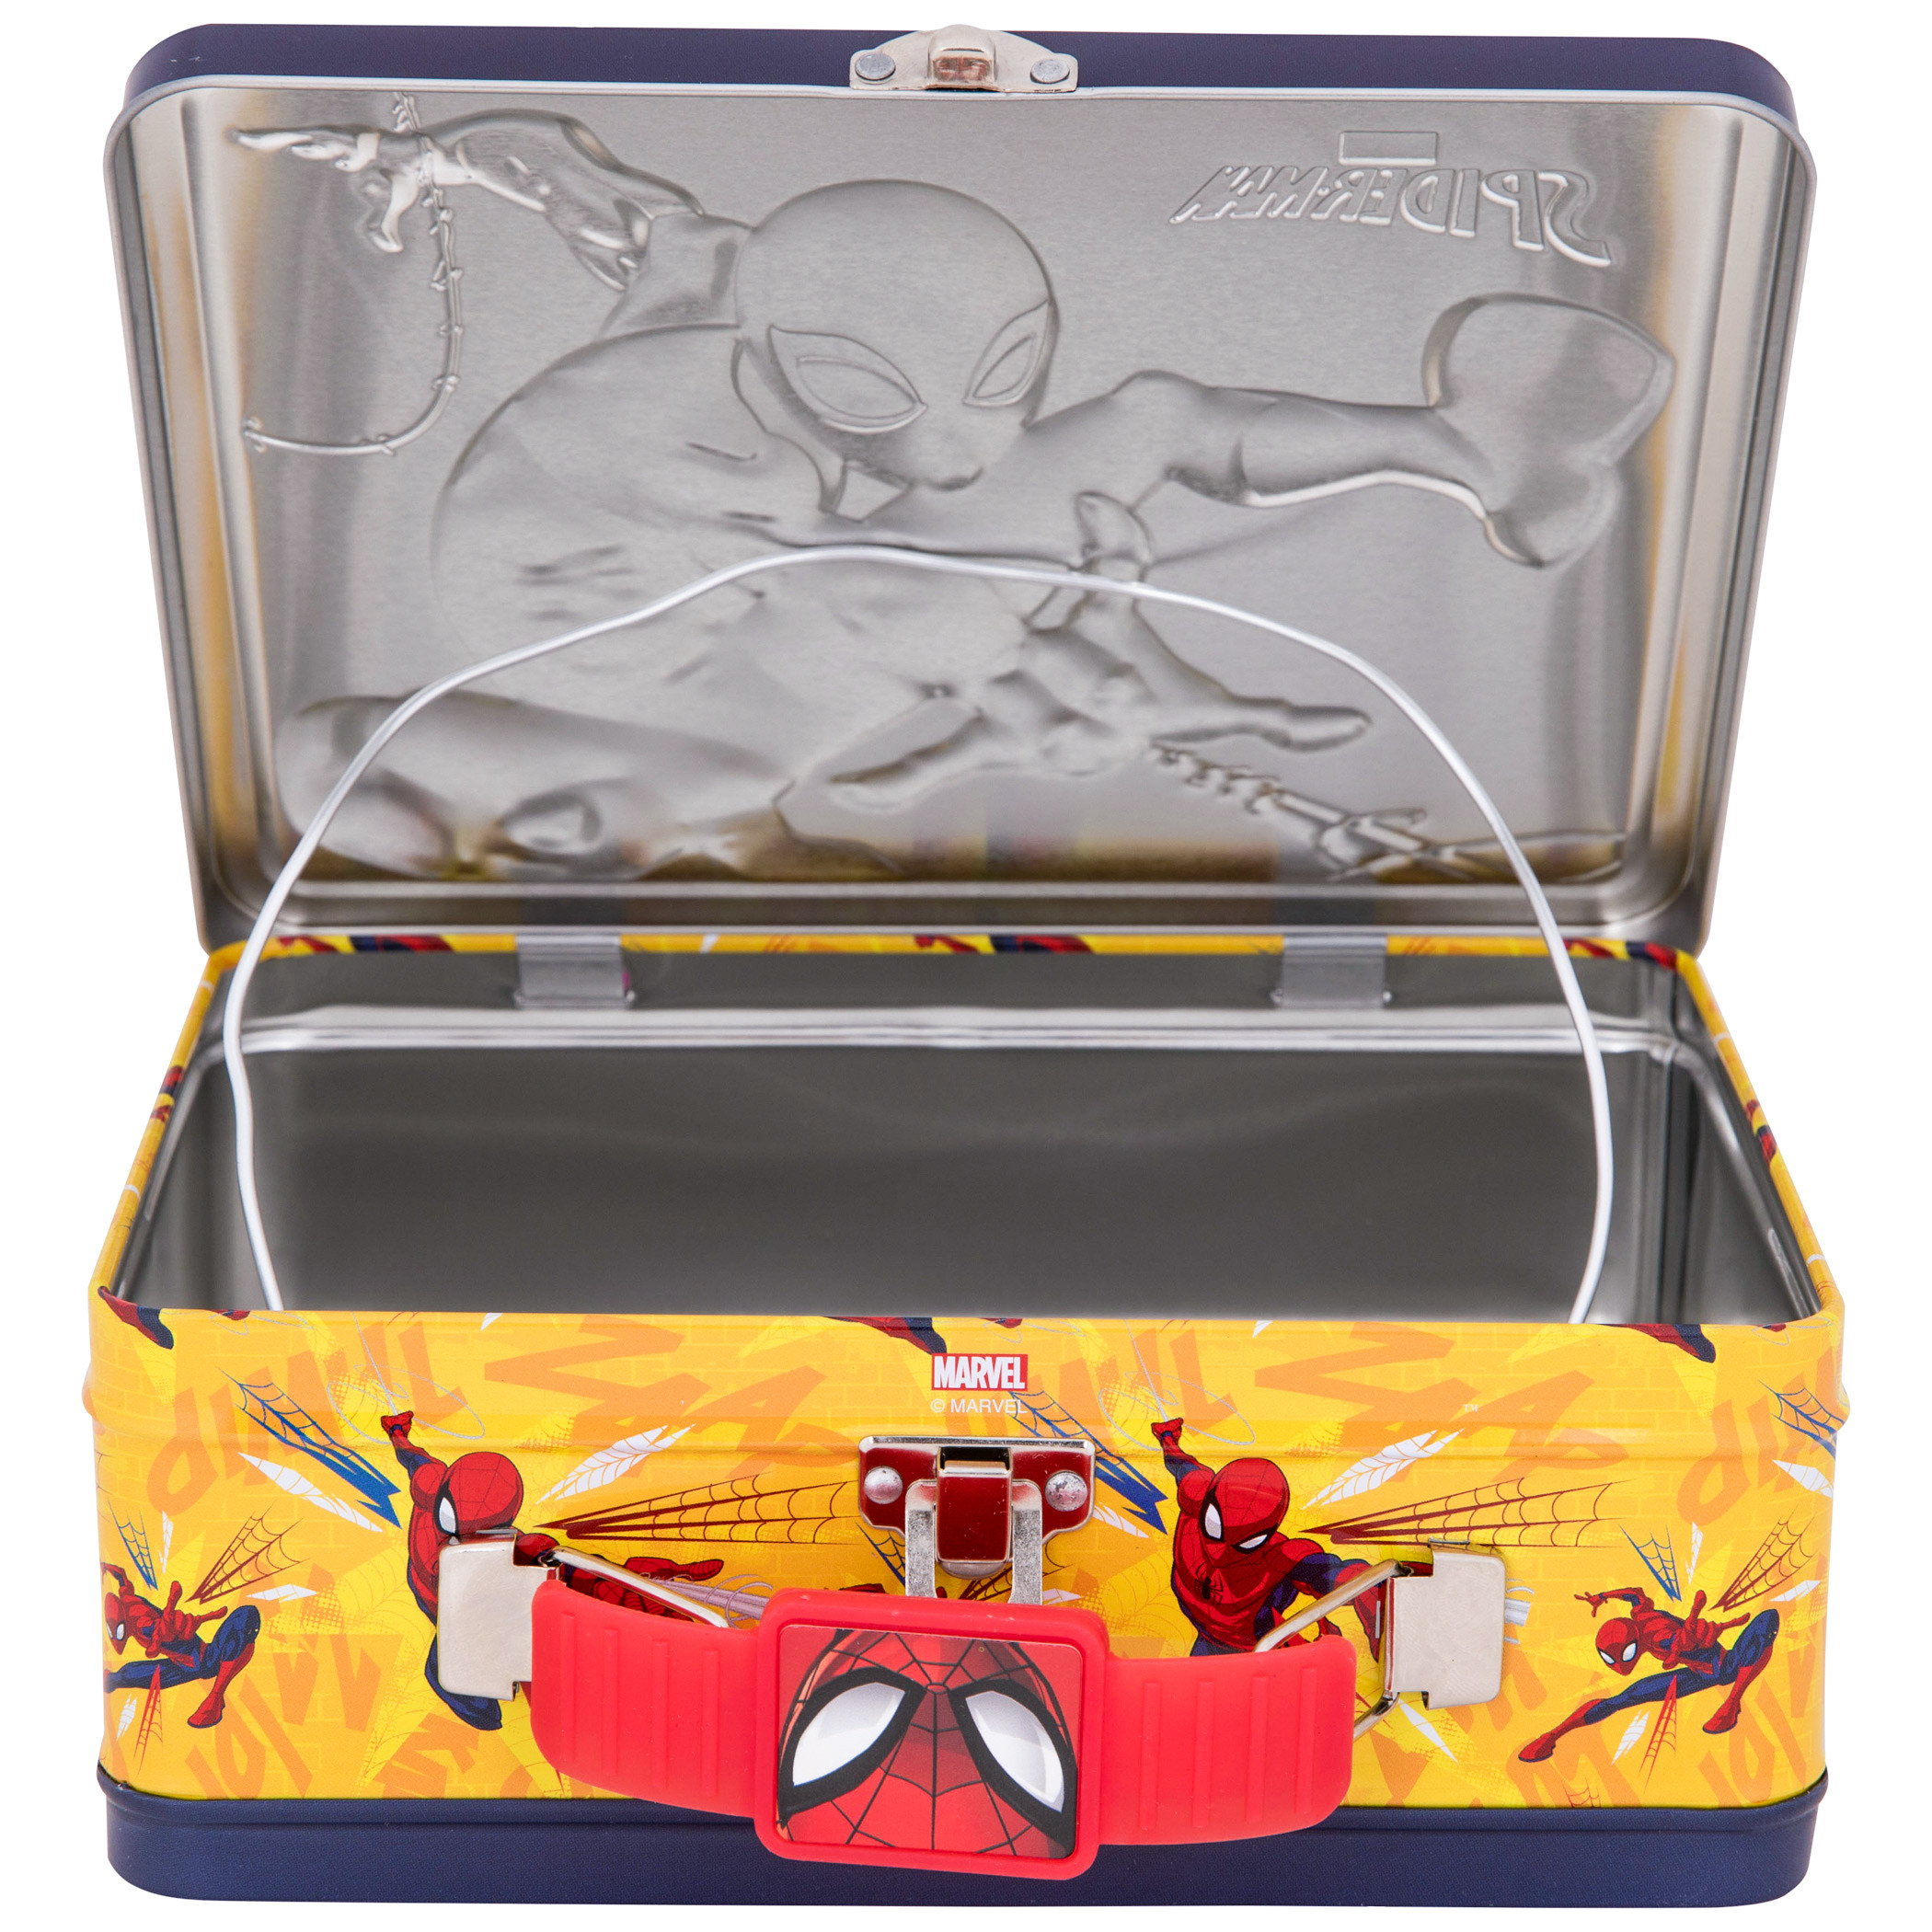 Spider-Man Swinging Through the City Tin Lunchbox